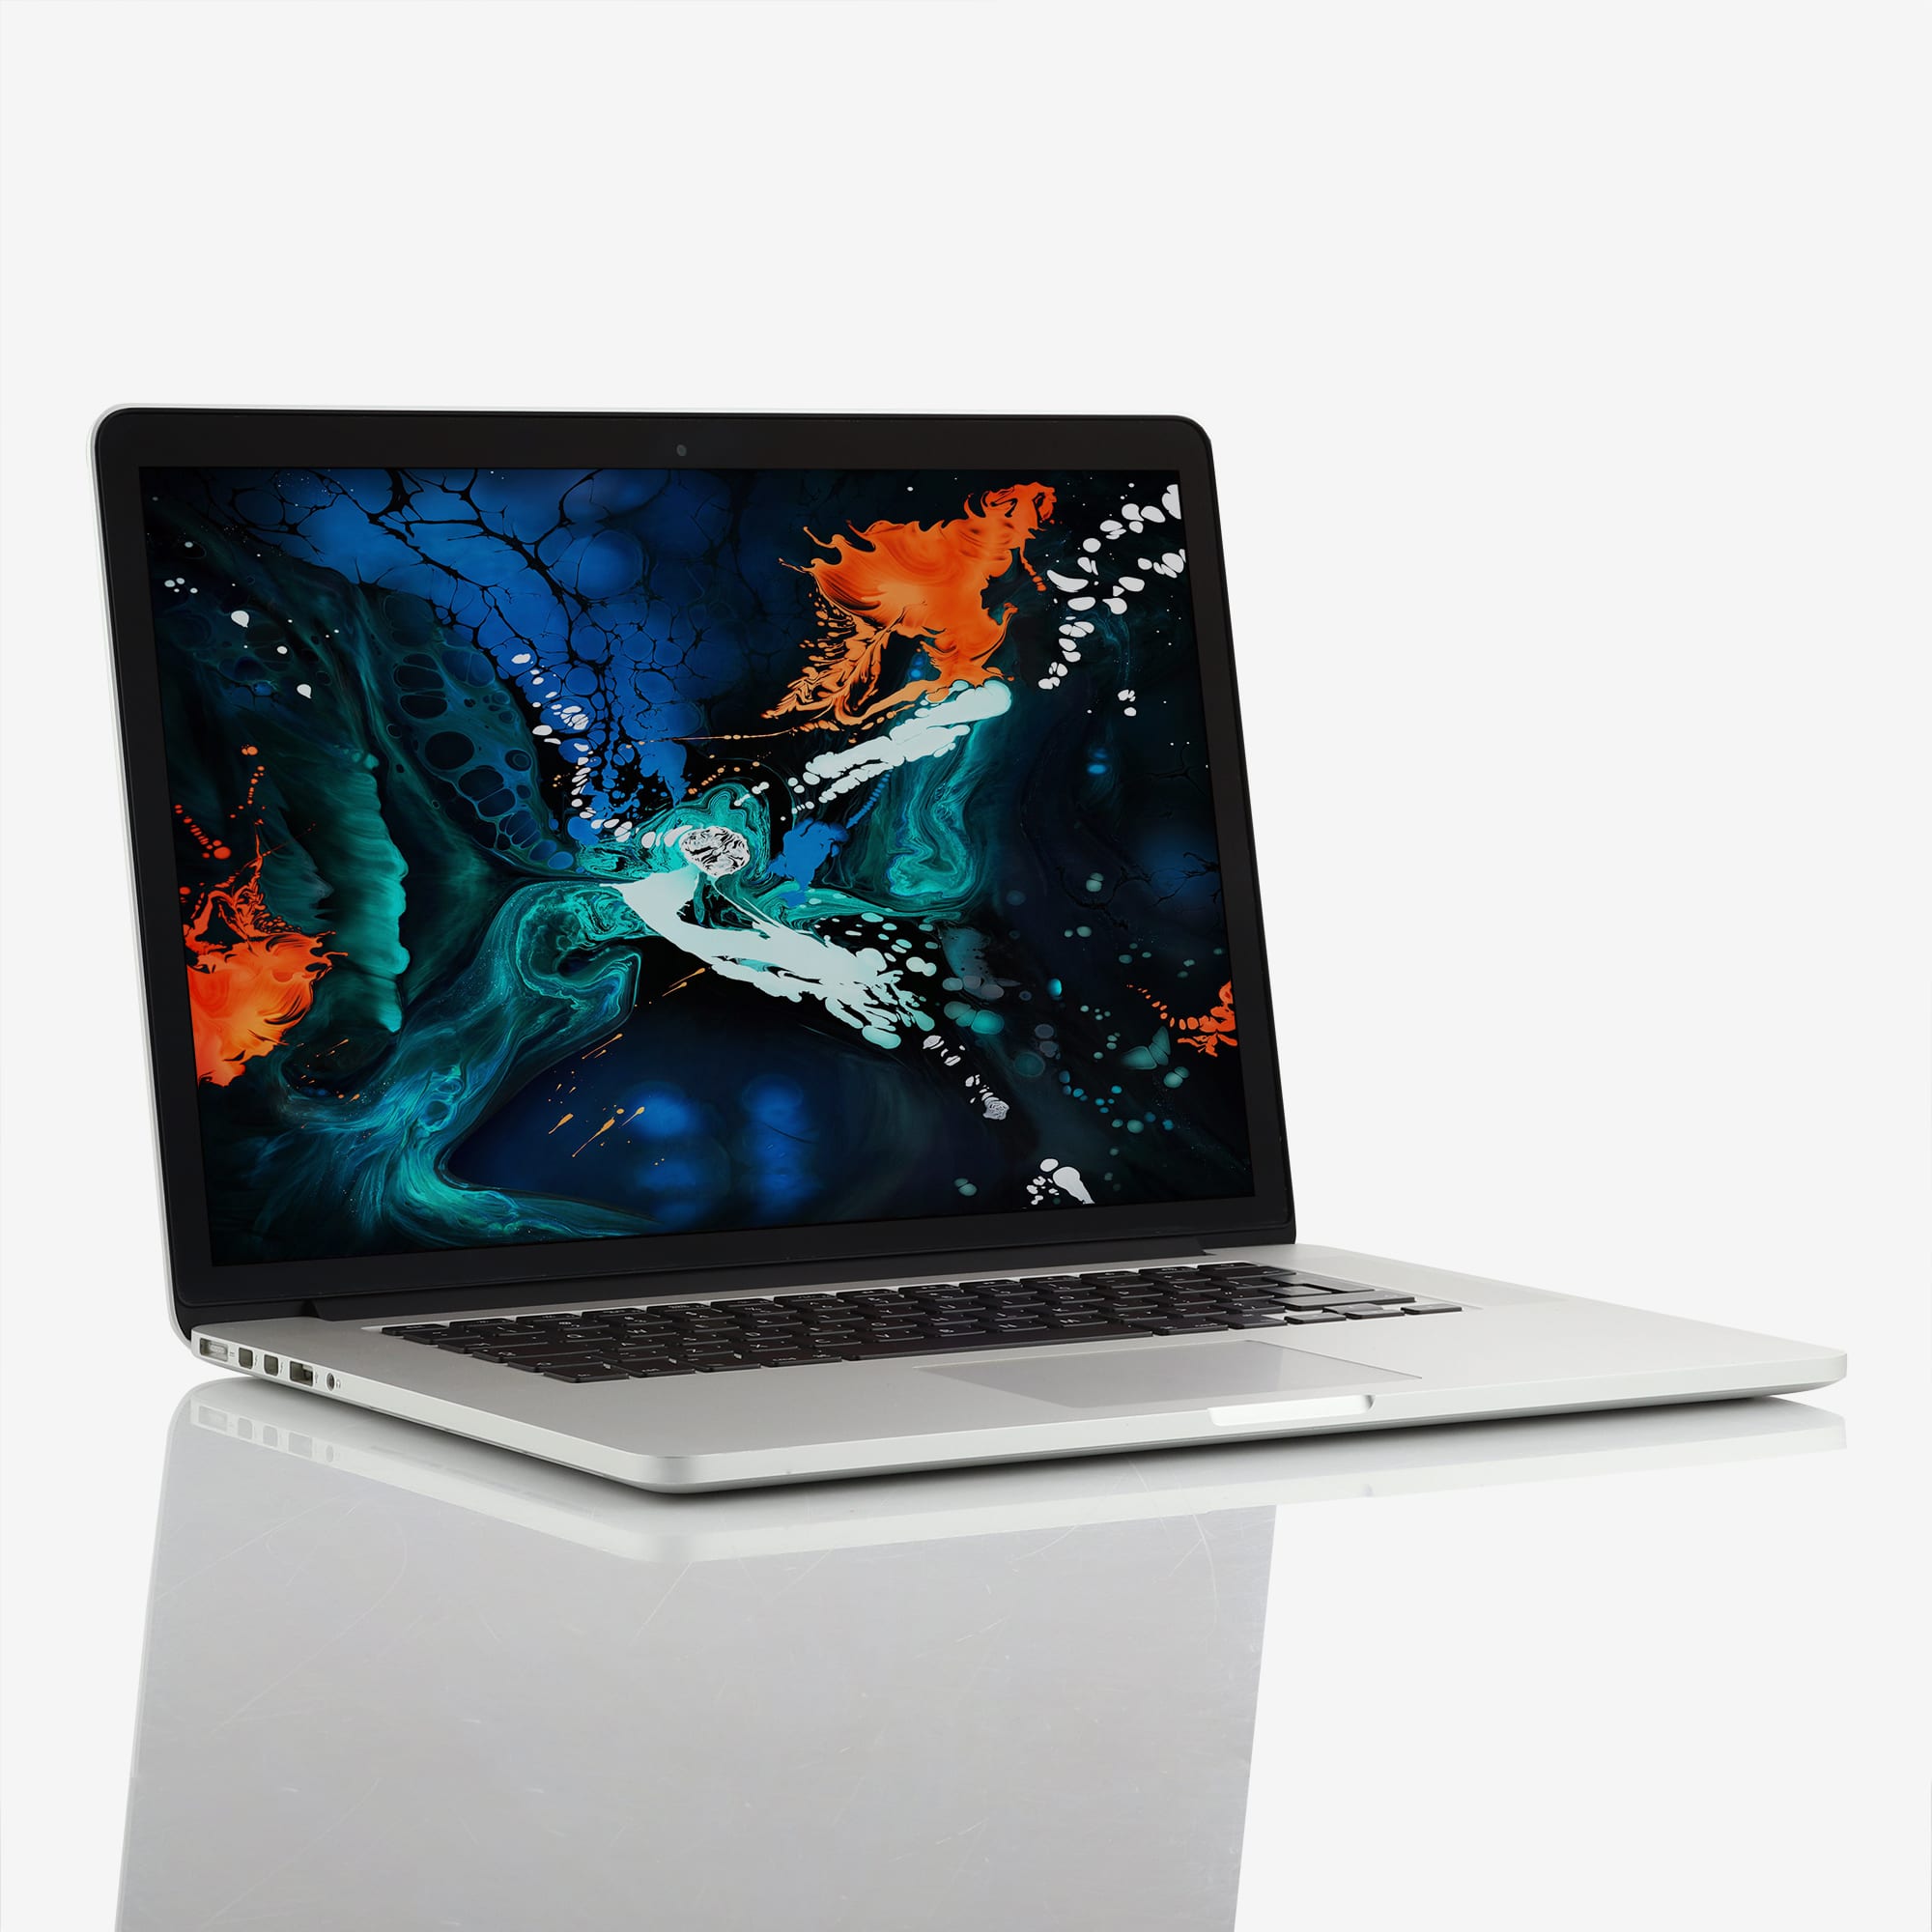 1 x Apple MacBook Pro Retina 15 Inch Intel Core i7 2.60 GHz (2012)